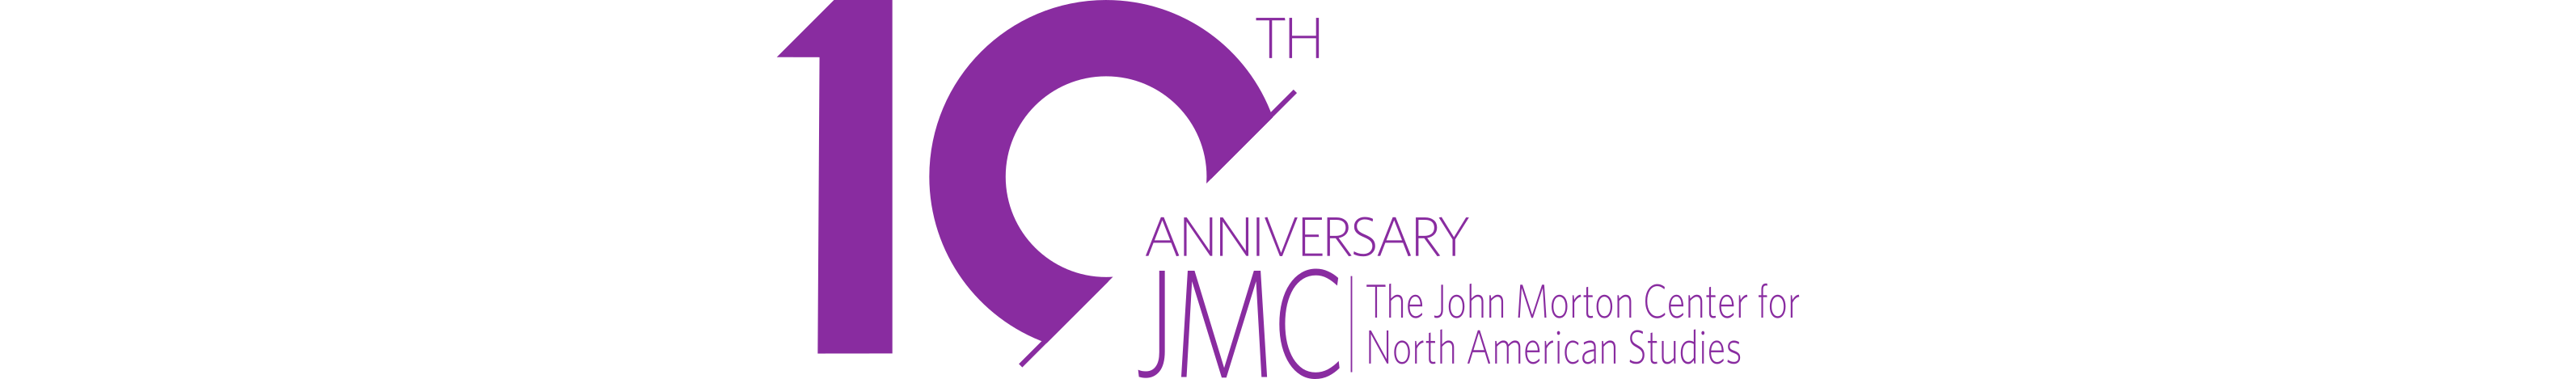 JMC's 10th Anniversary logo